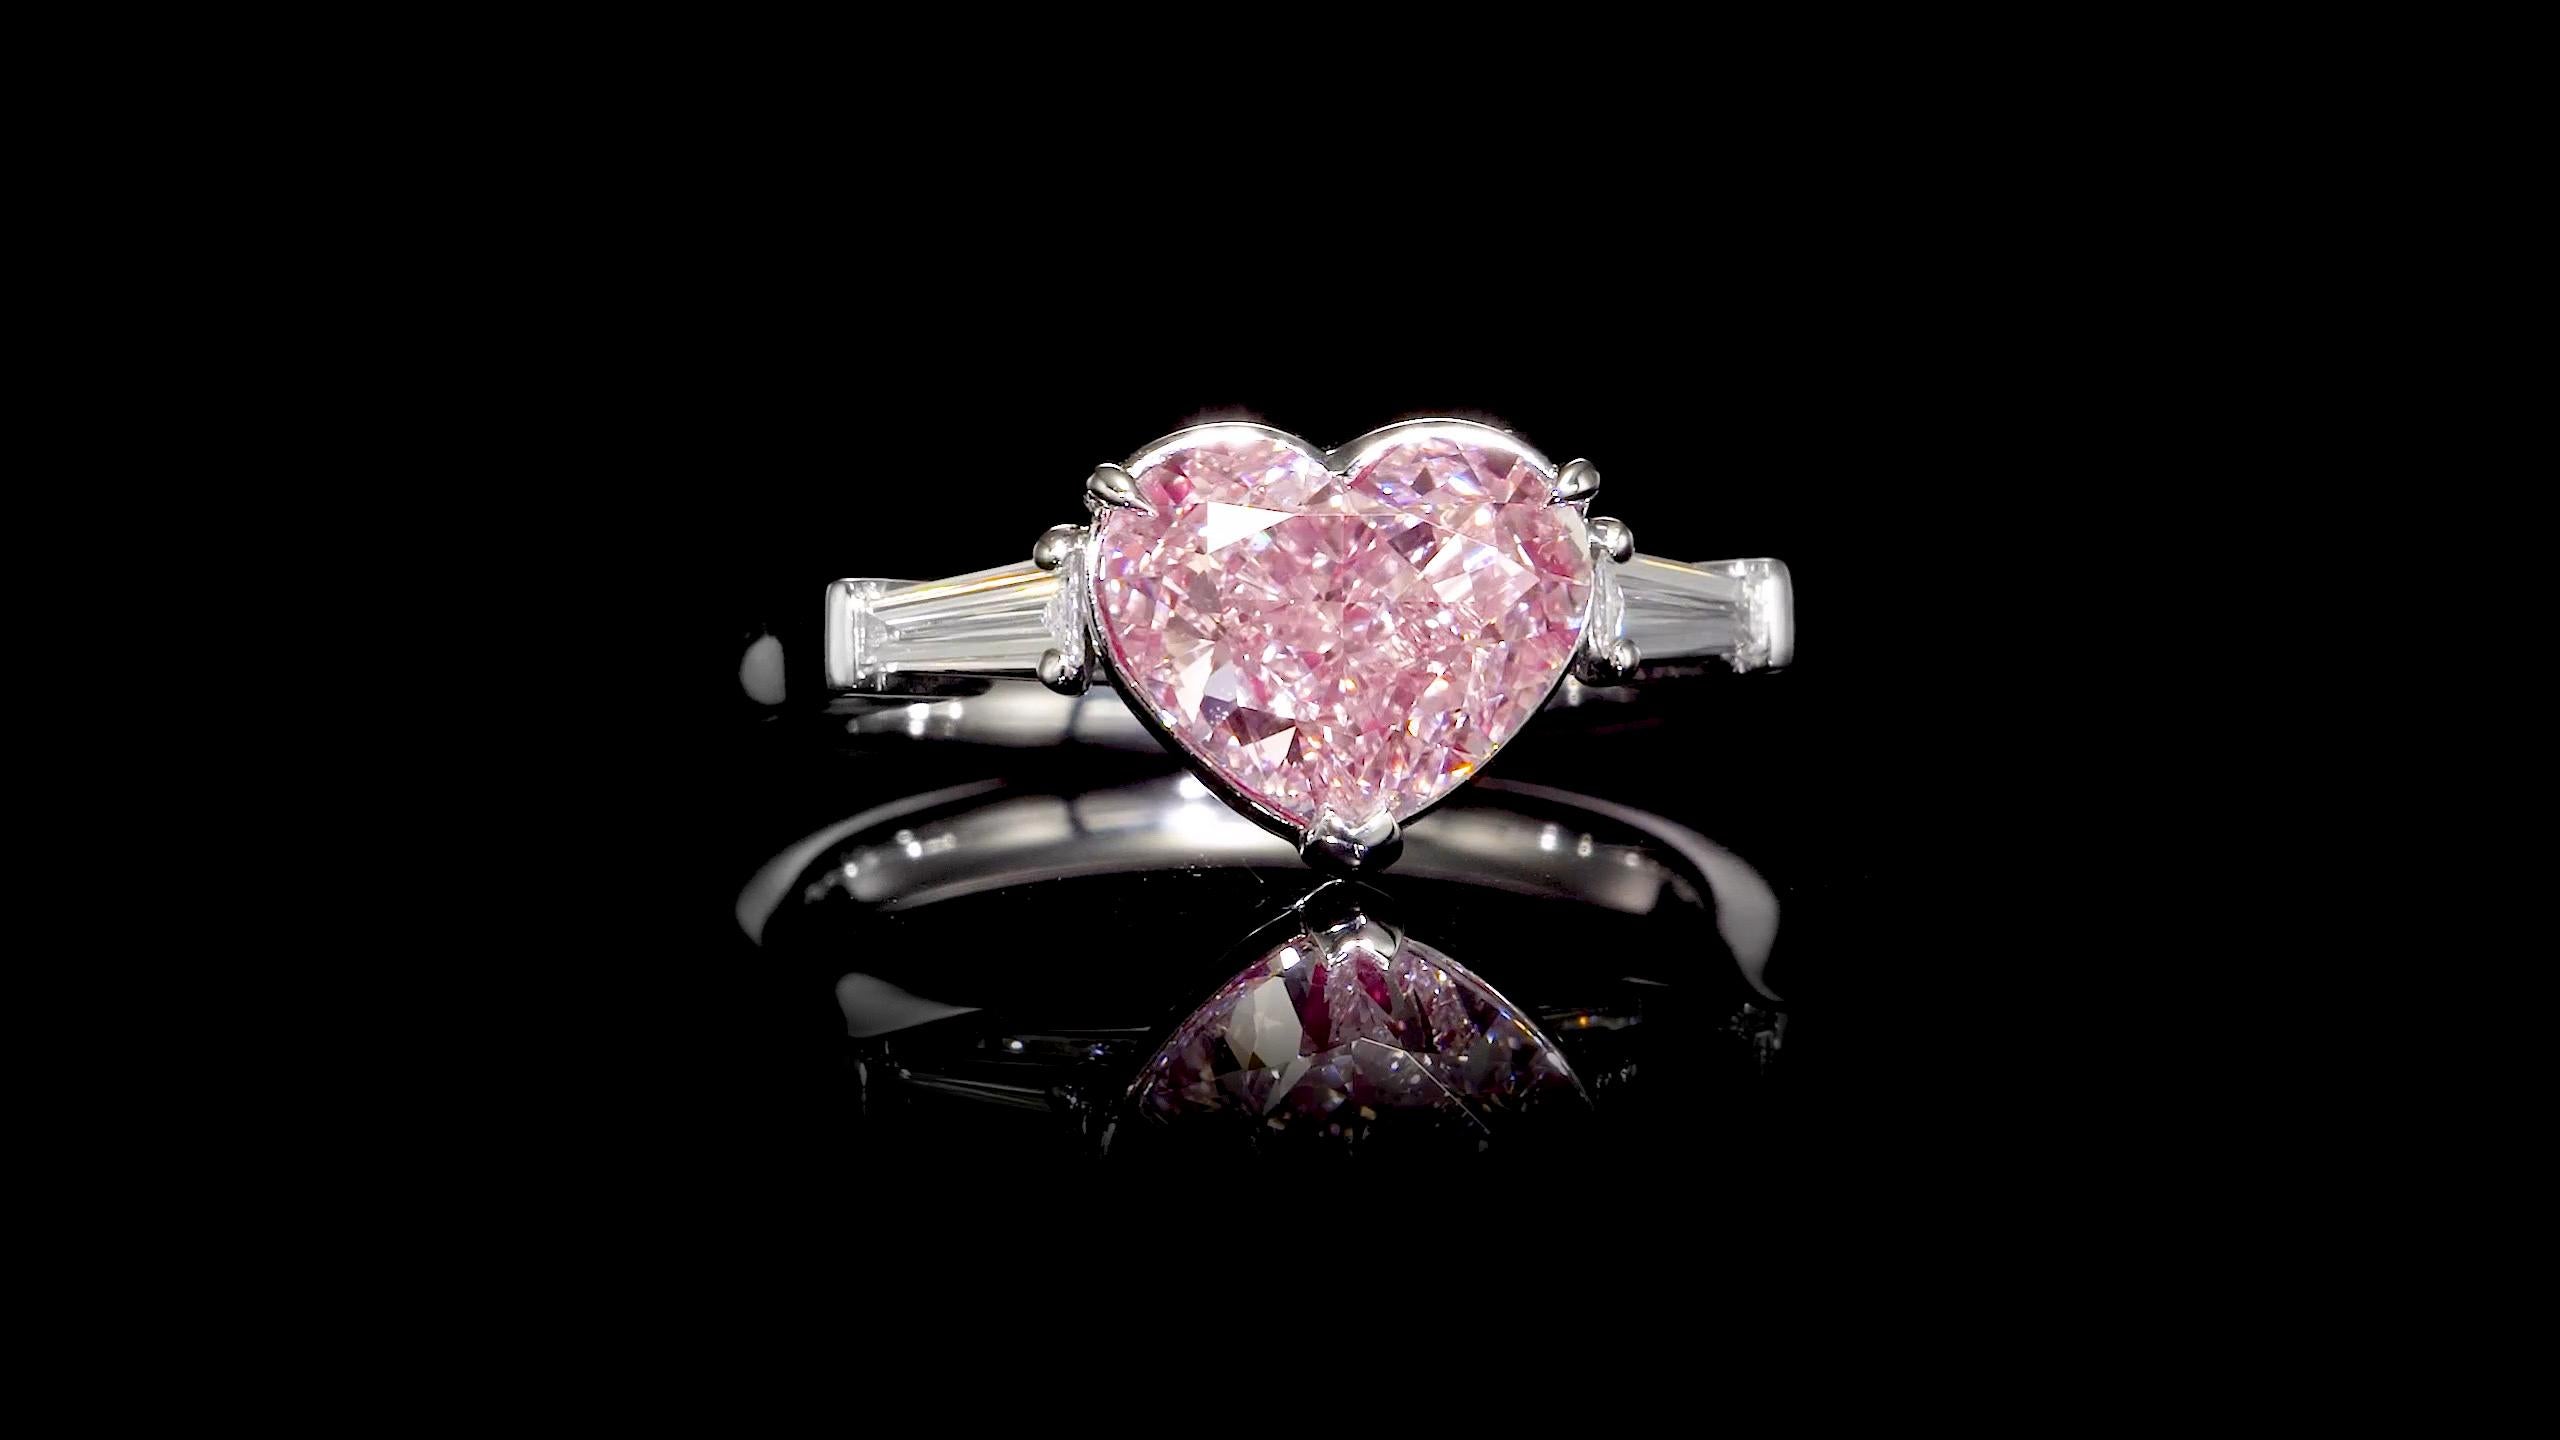 Heart Cut Emilio Jewelry Gia Certified 3.00 Carat Fancy Light Pink Diamond Ring For Sale